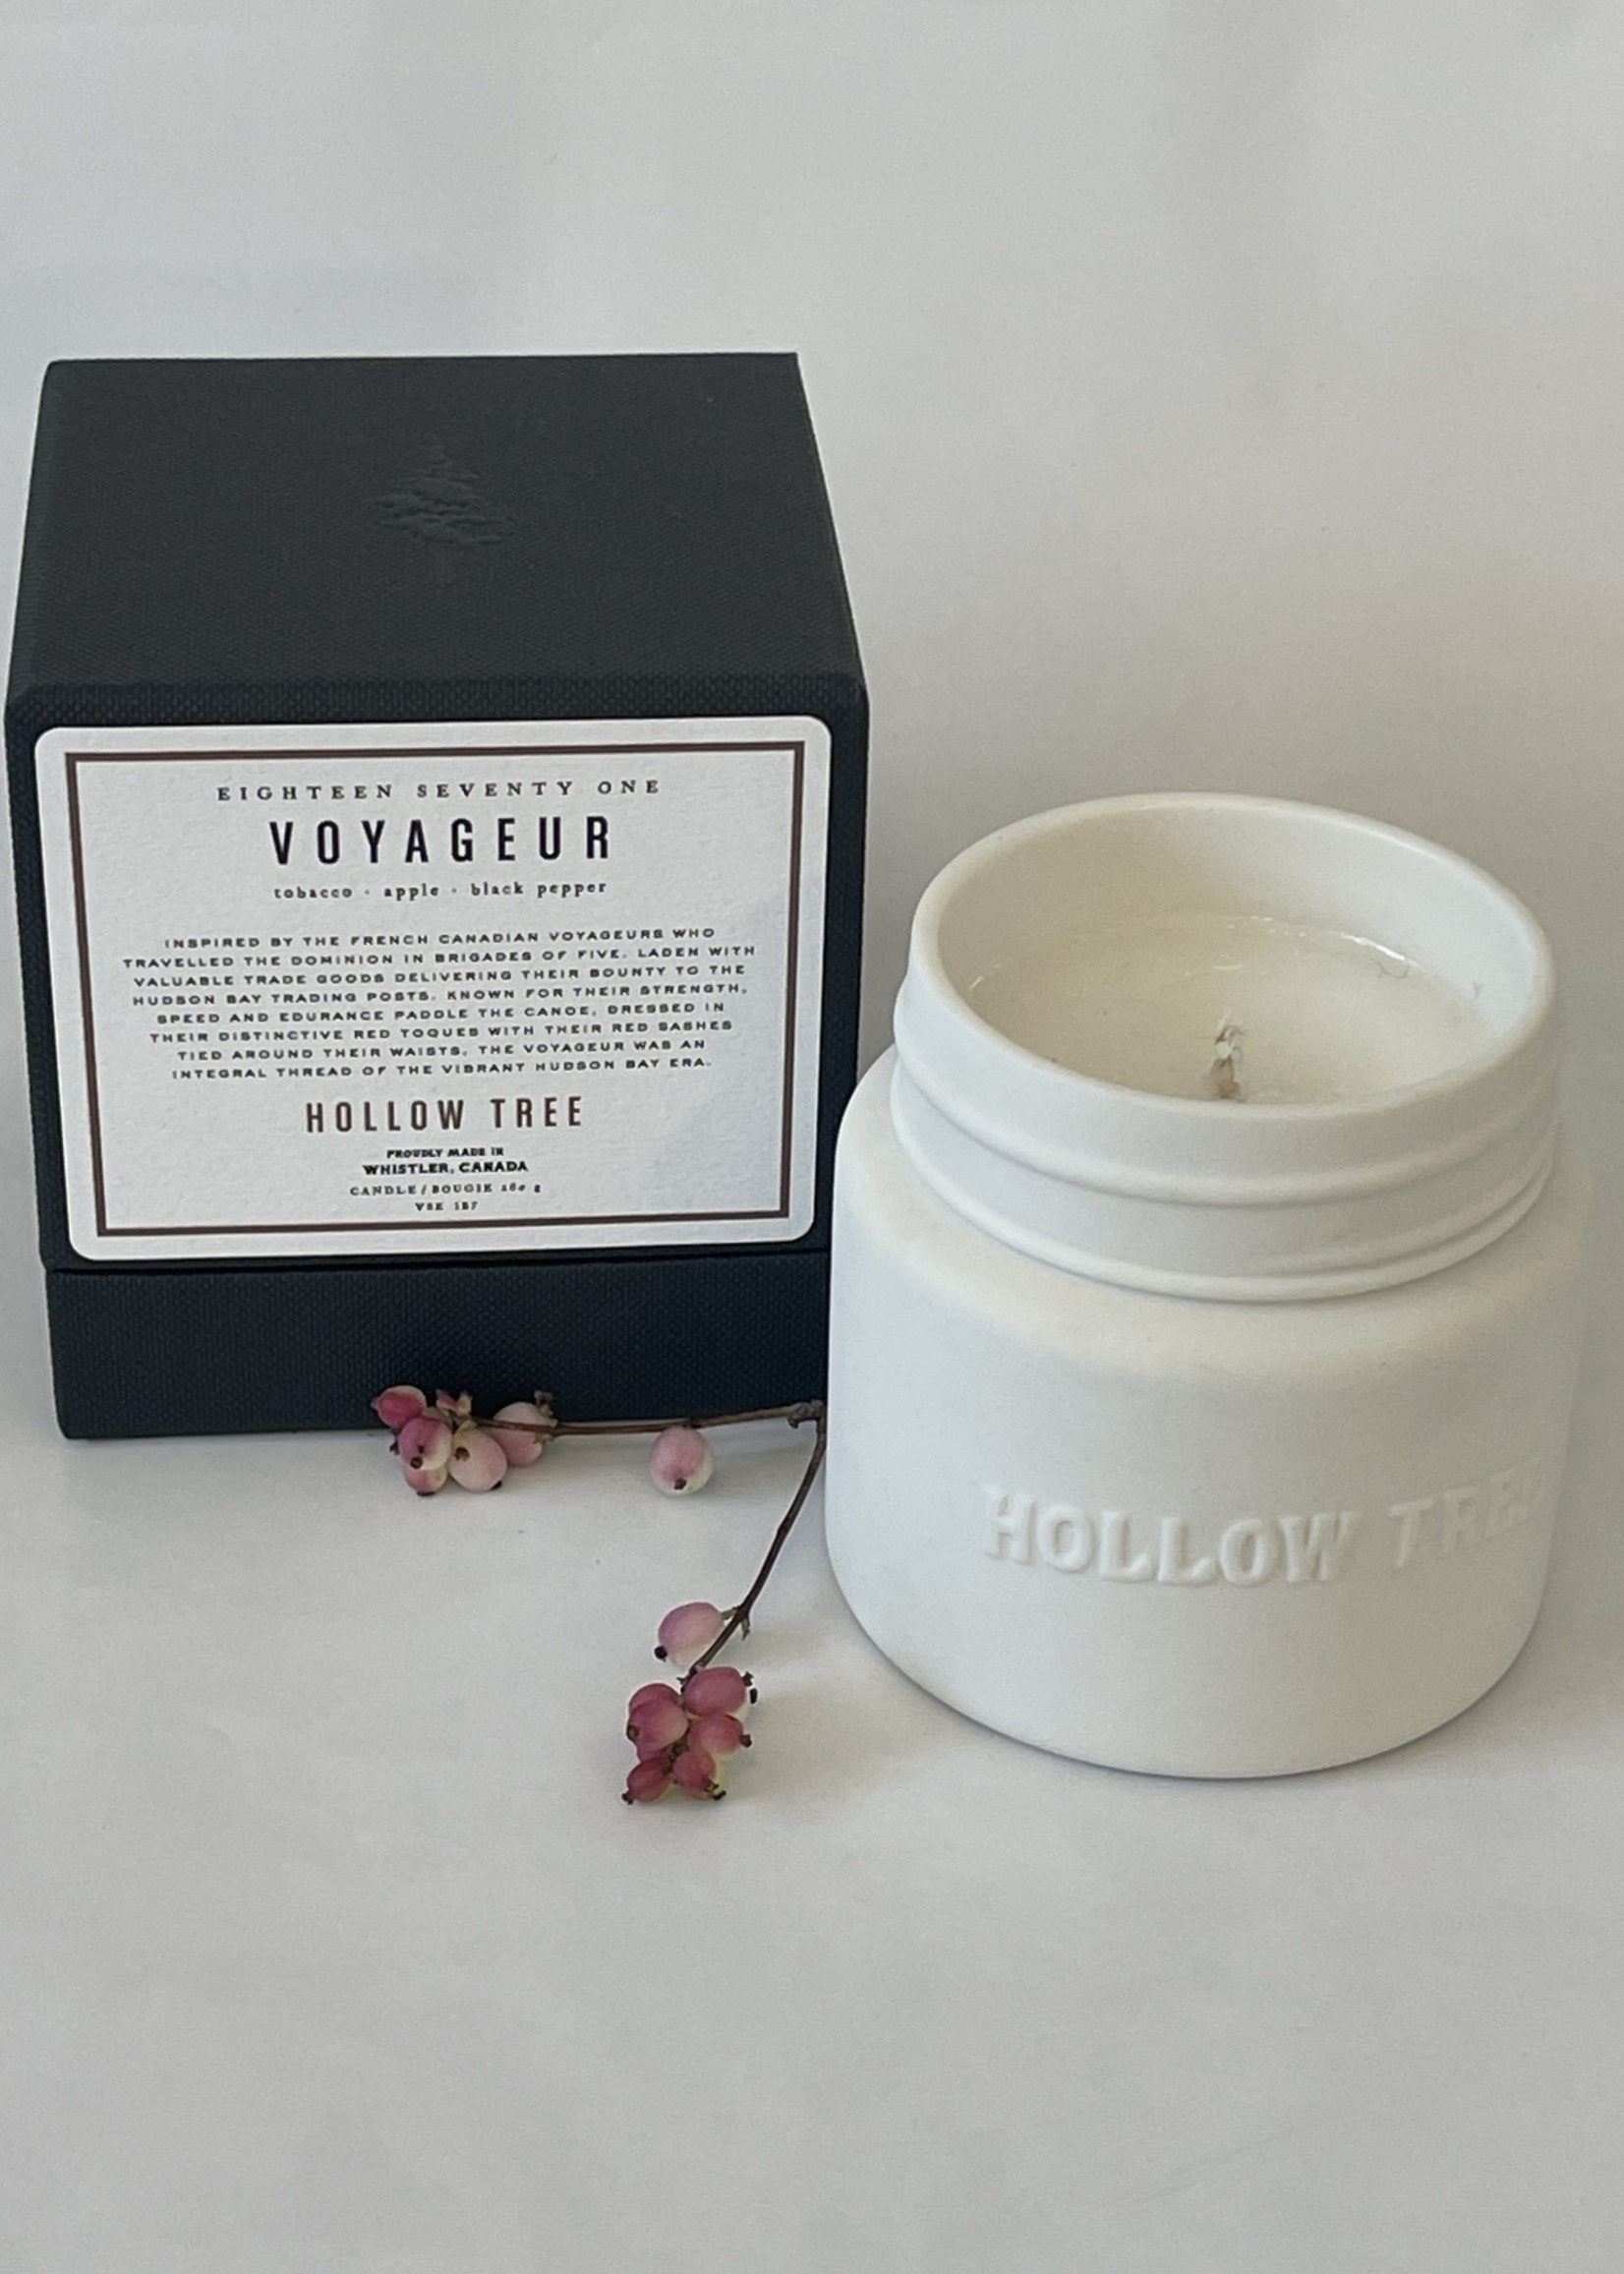 Hollow Tree Hollow Tree - Voyageur